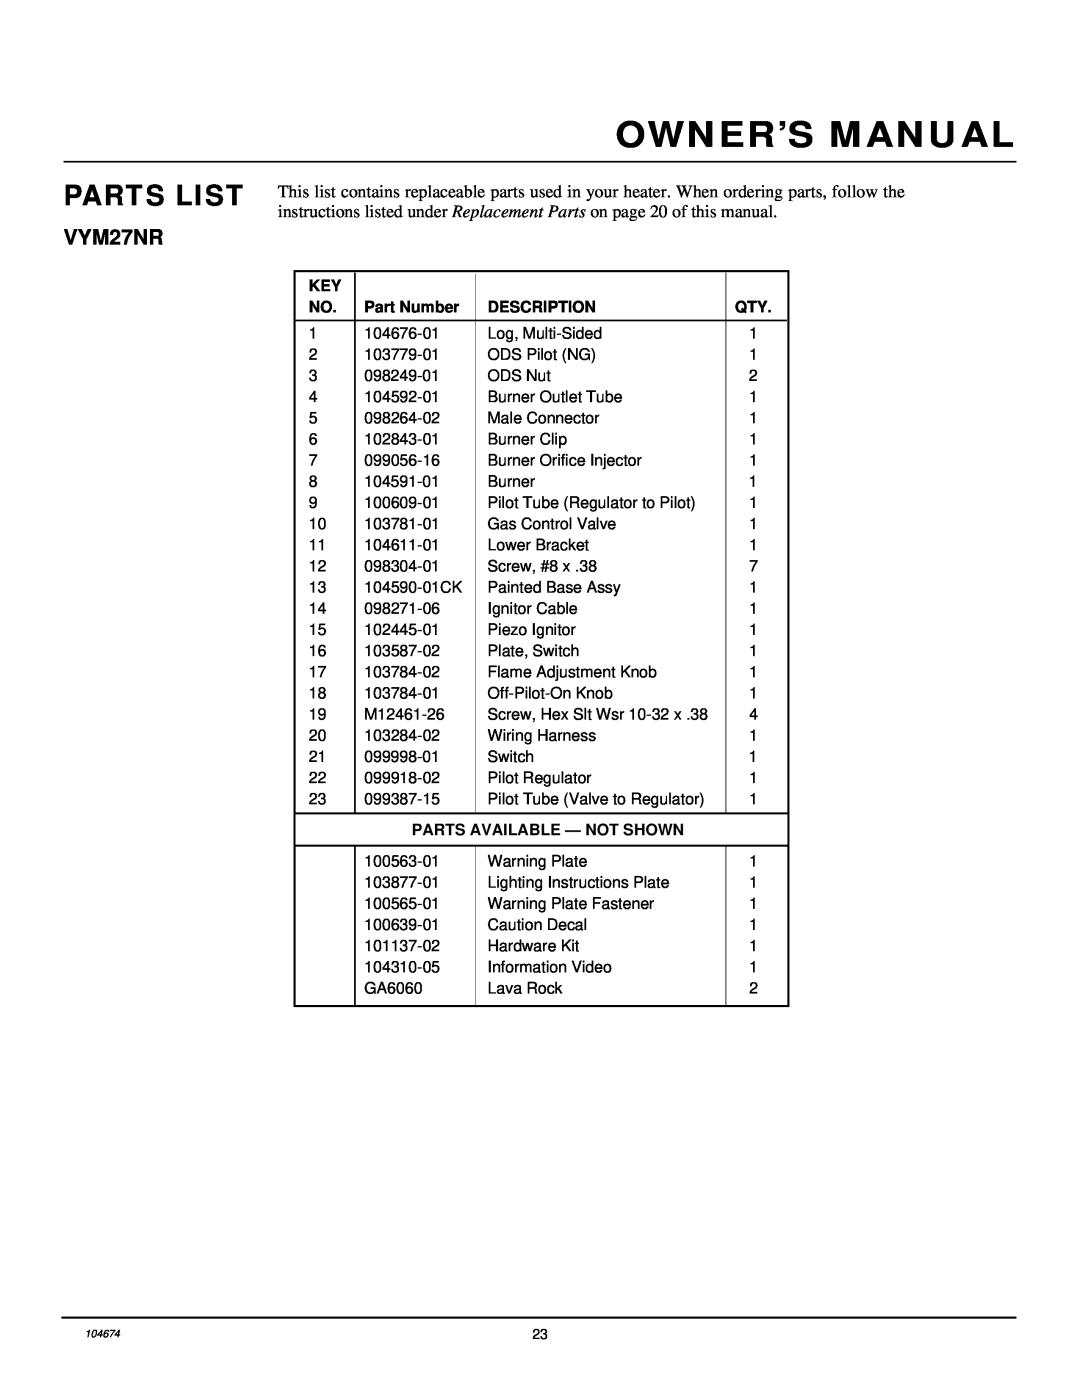 Desa VYM27NR installation manual Parts List, Part Number, Description, Parts Available - Not Shown 